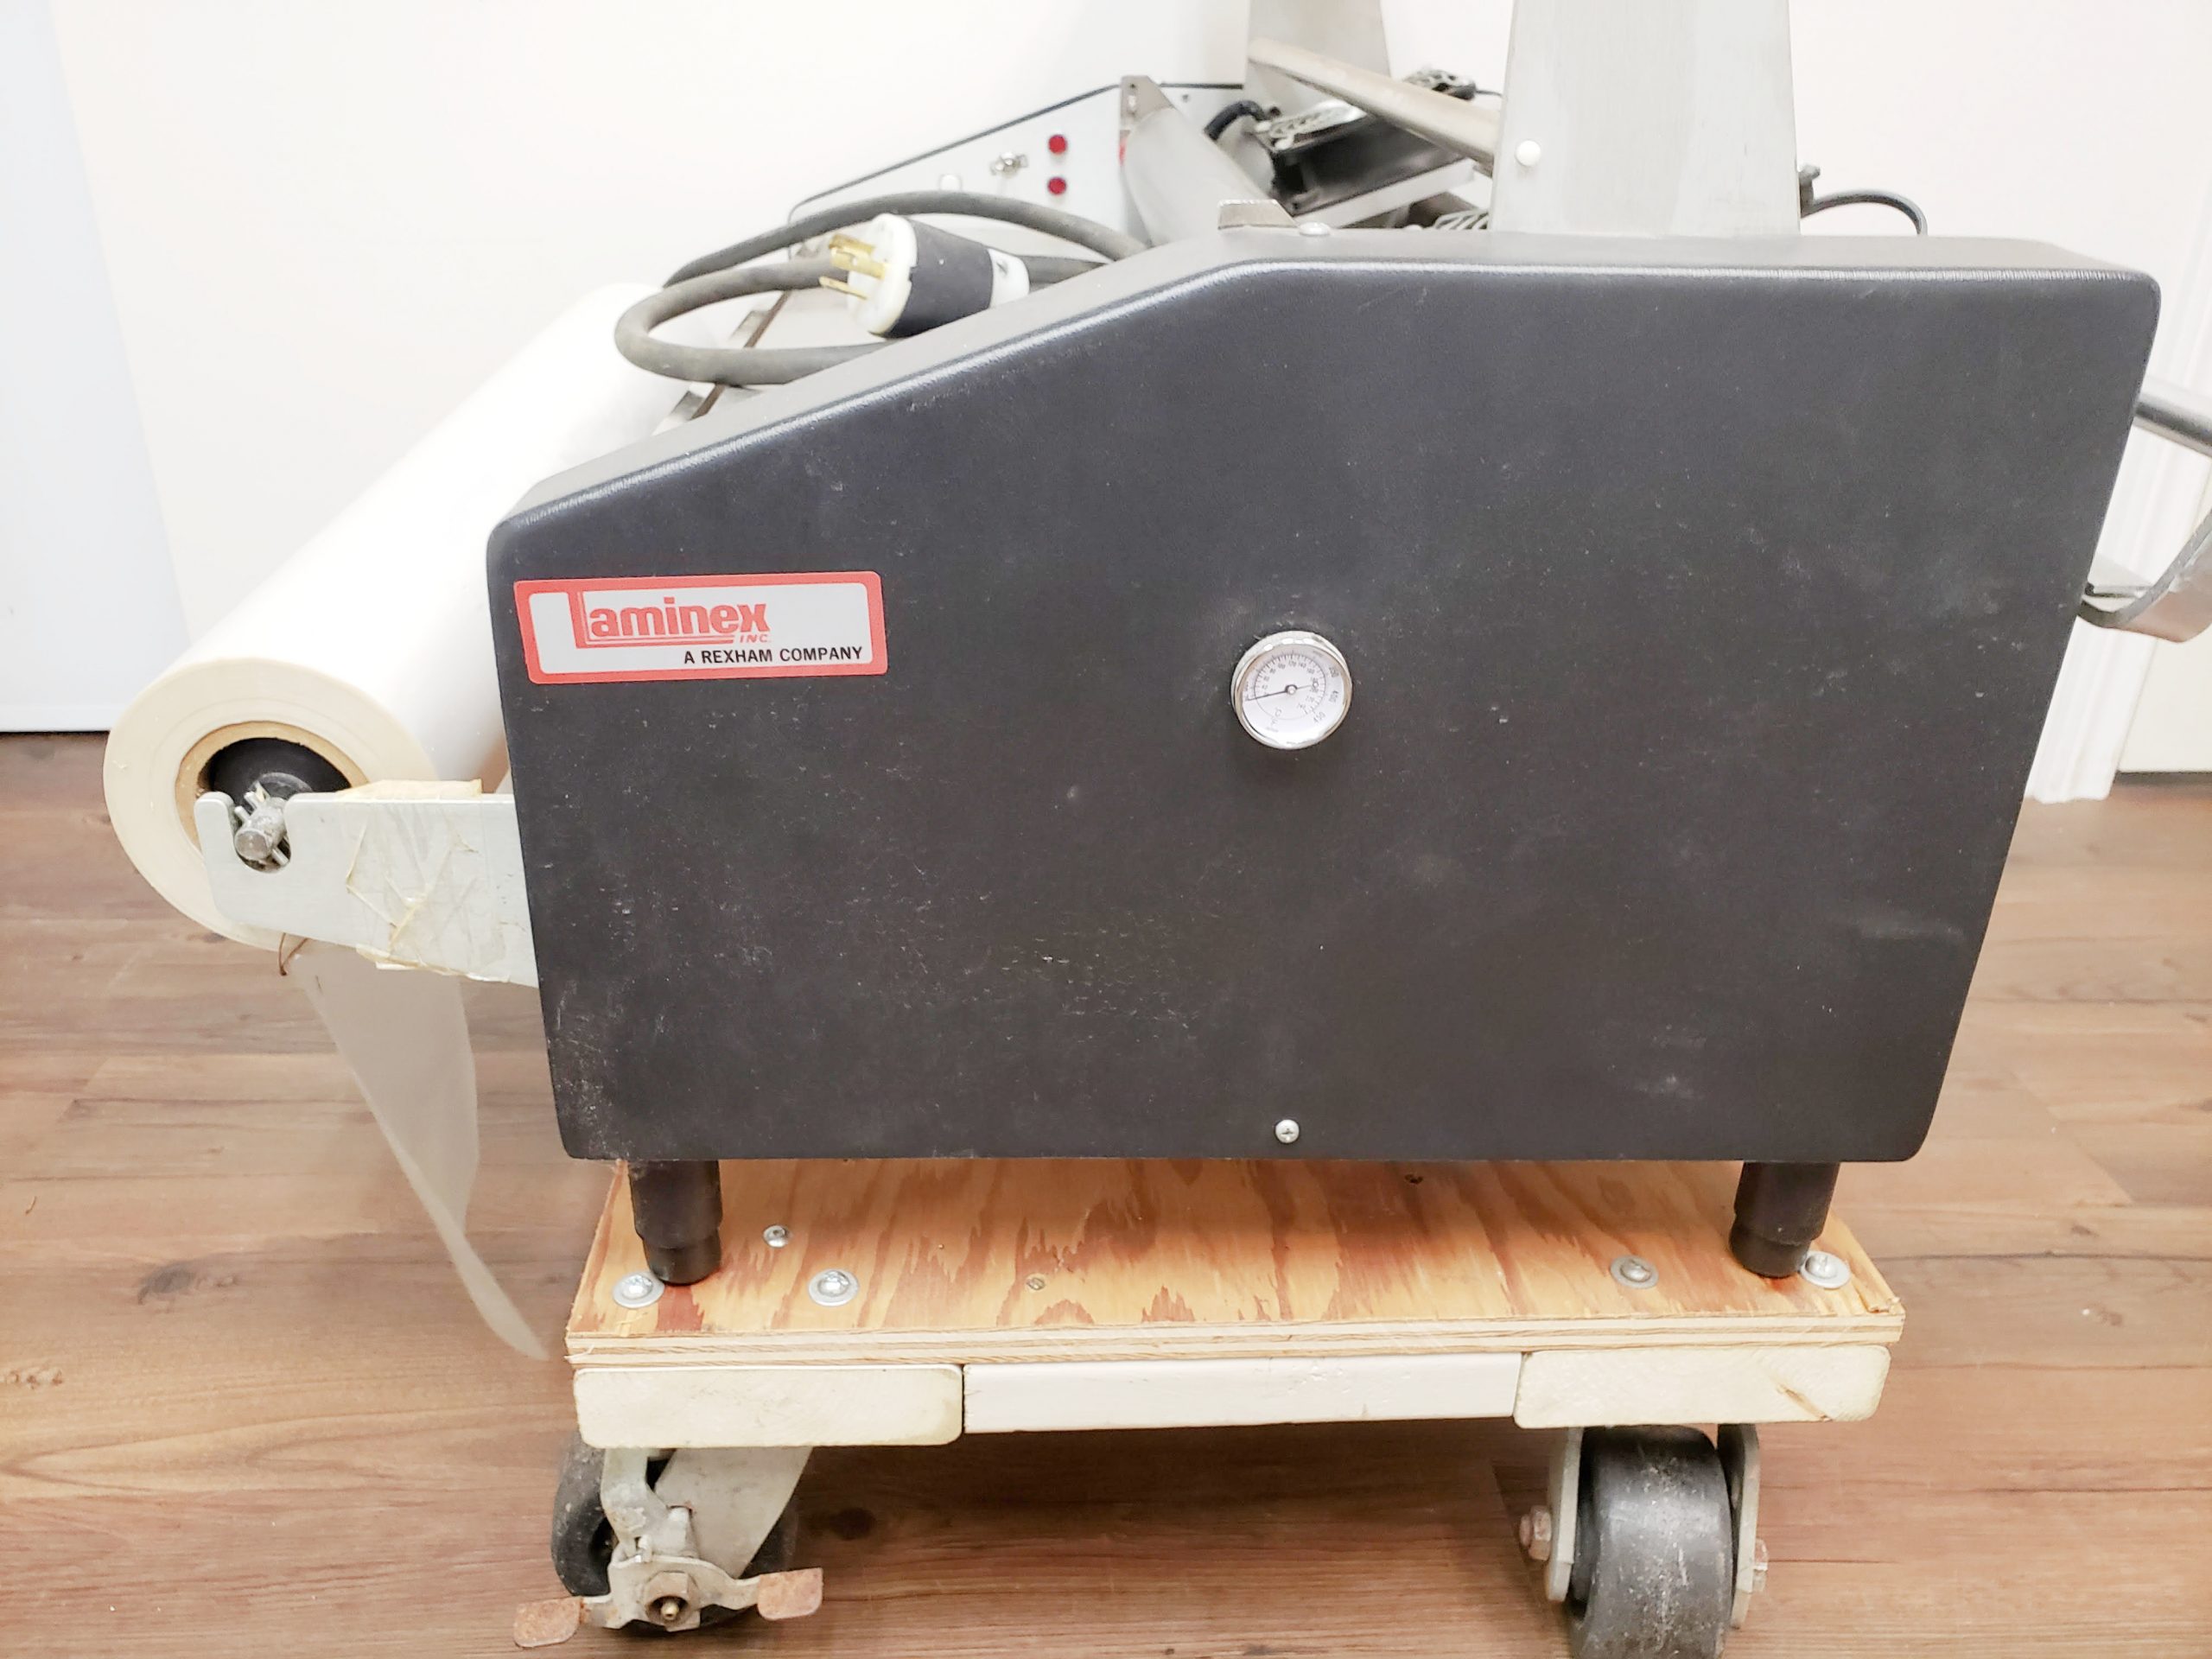 Rexham Laminex 2500 Thermal Roll Laminator (Used) Item # UE-100421A (Canada)